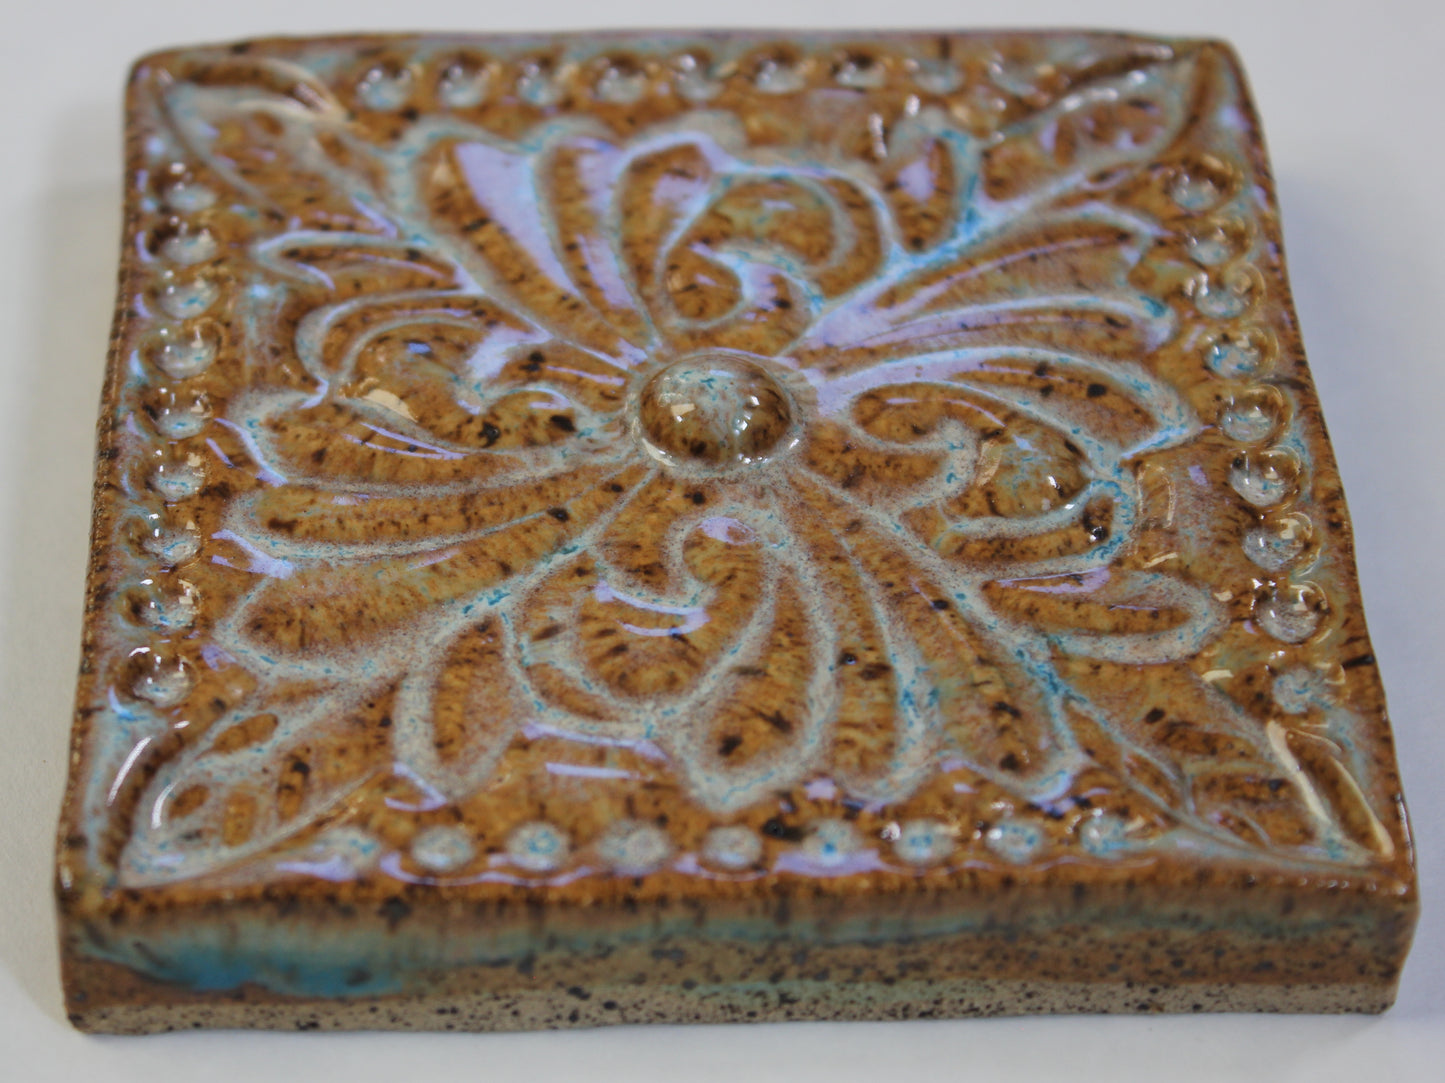 Art Nouveau Raised Patterned Ceramic Tile for Mosaics and Home Decoration